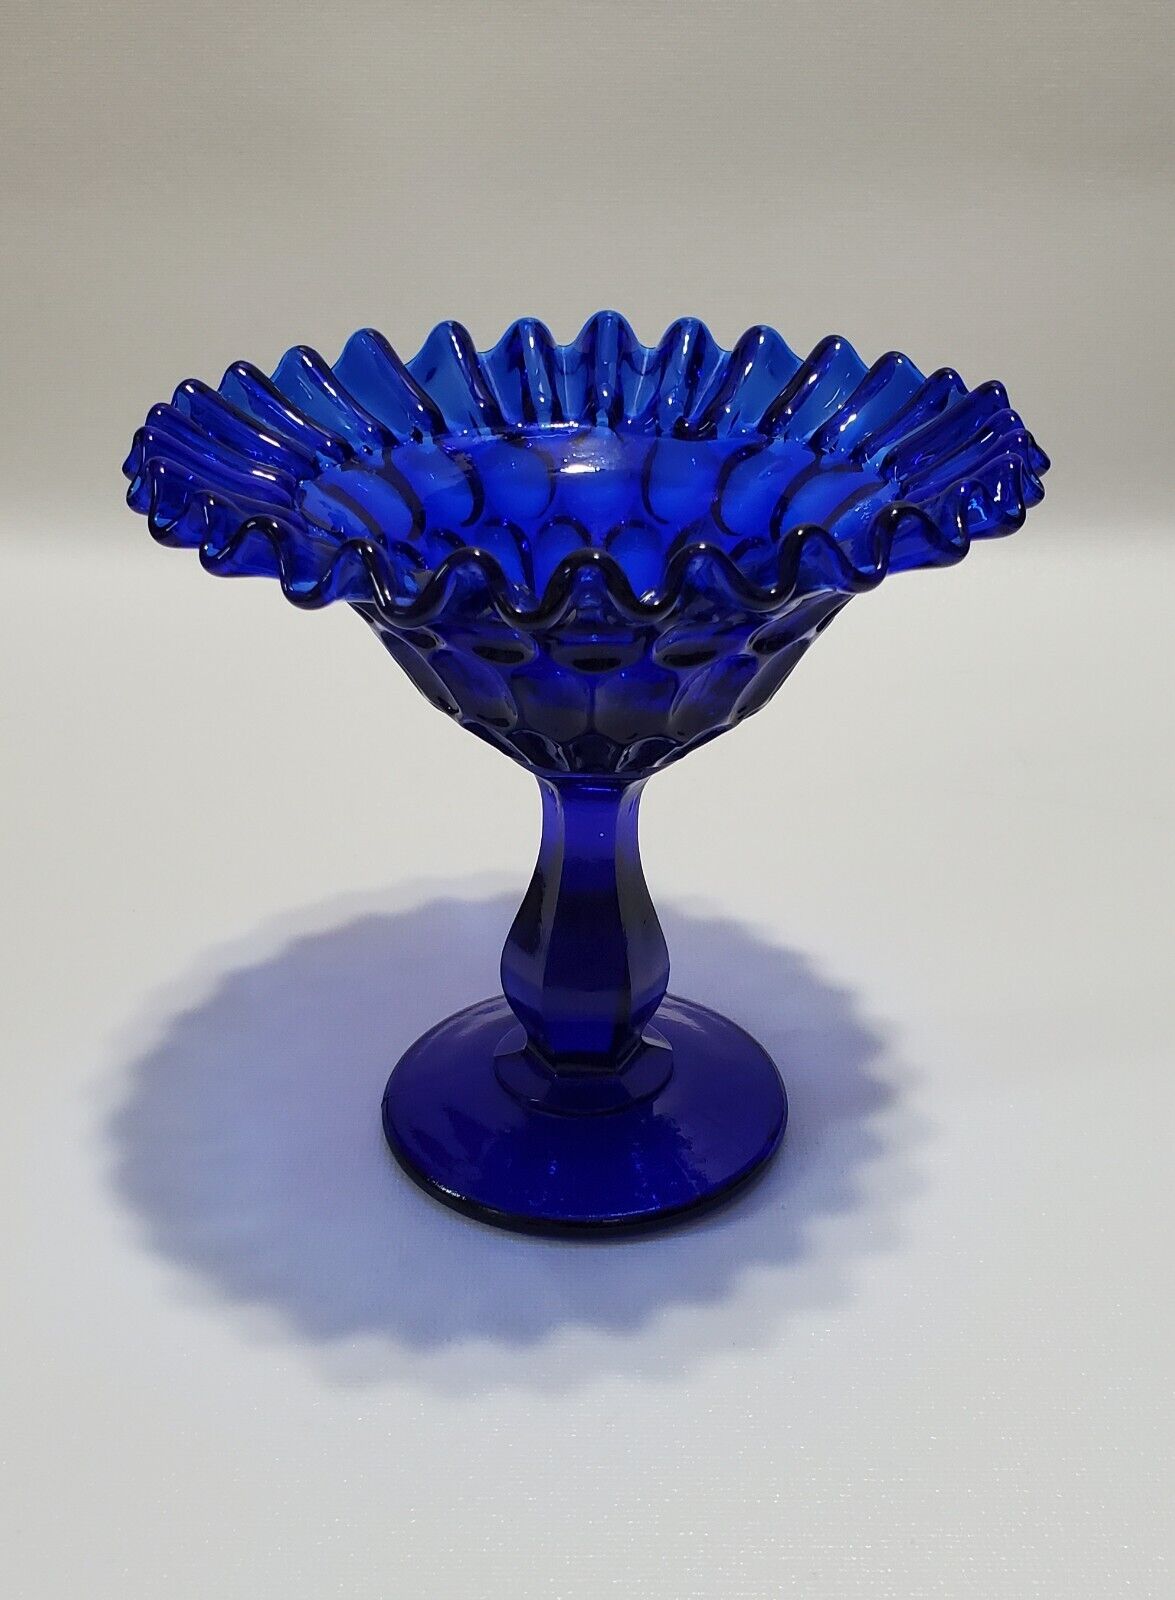 Cobalt Blue Glass Compote, Pedestal Bowl, Fenton Style Thumbprint Ruffled Edge